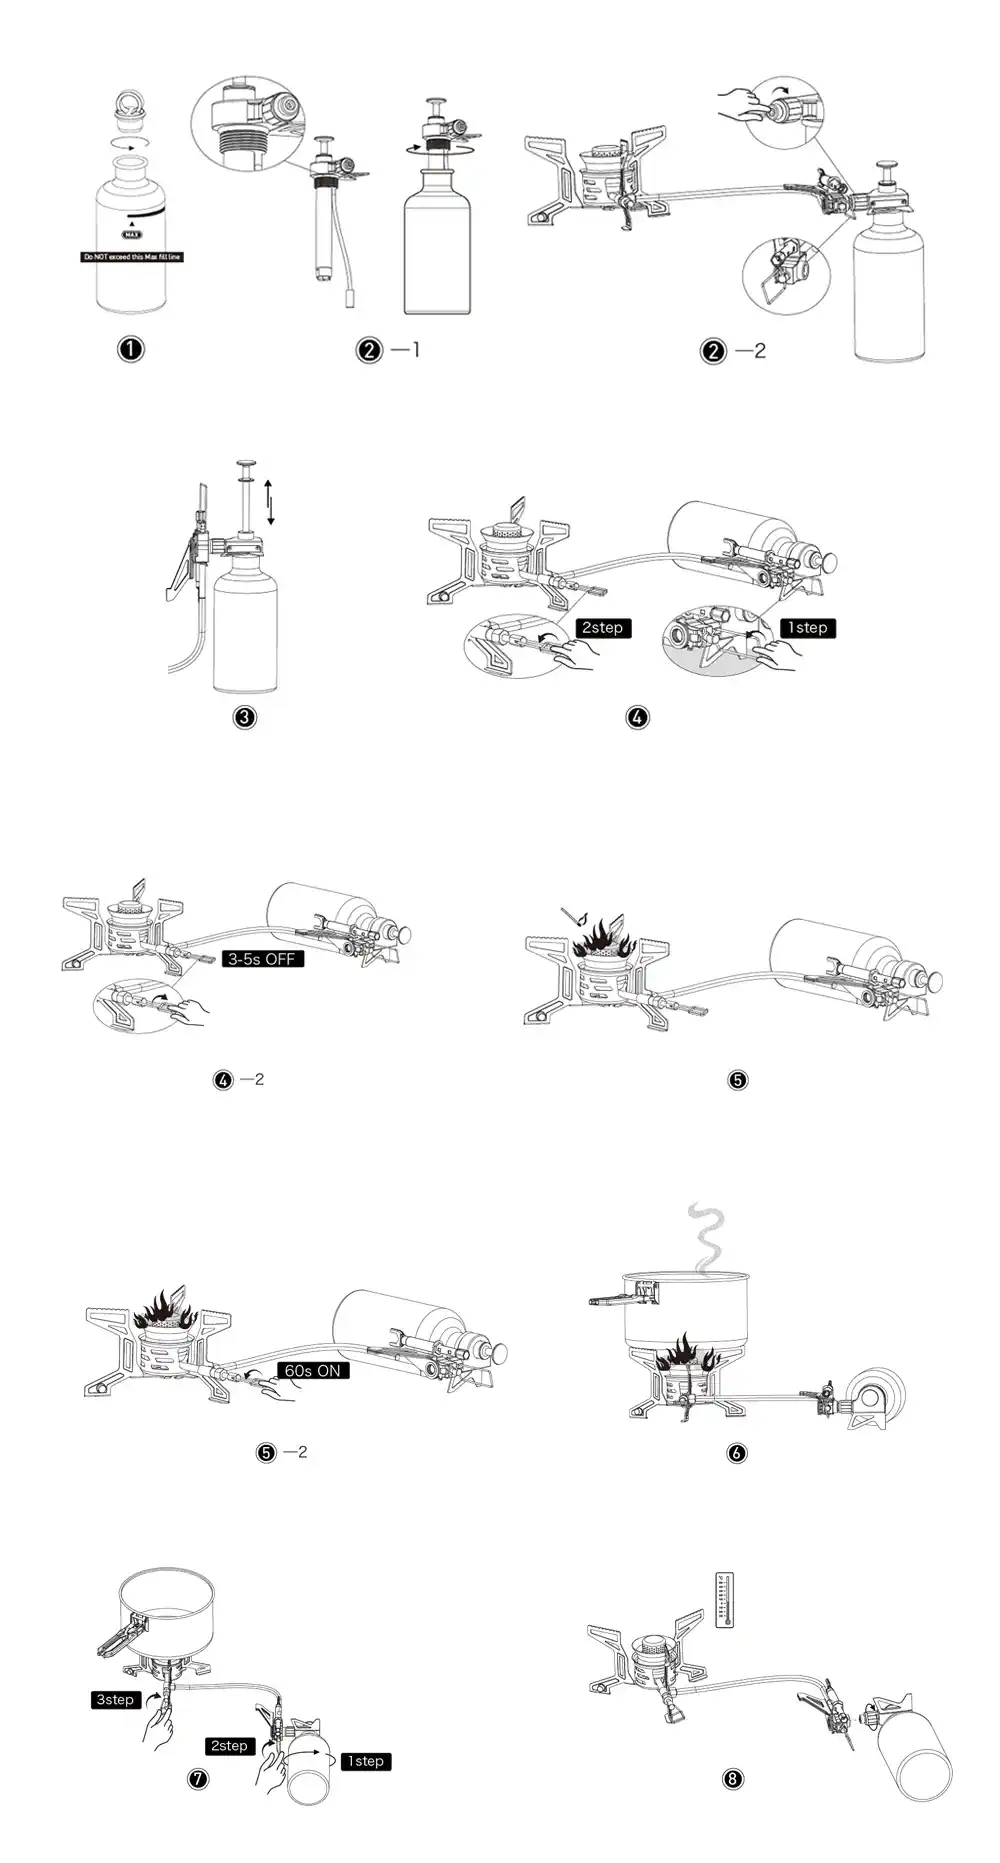 راهنمای اتصال سرشعله چند سوخت فایرمیپل مدل لاوا به بطری سوخت